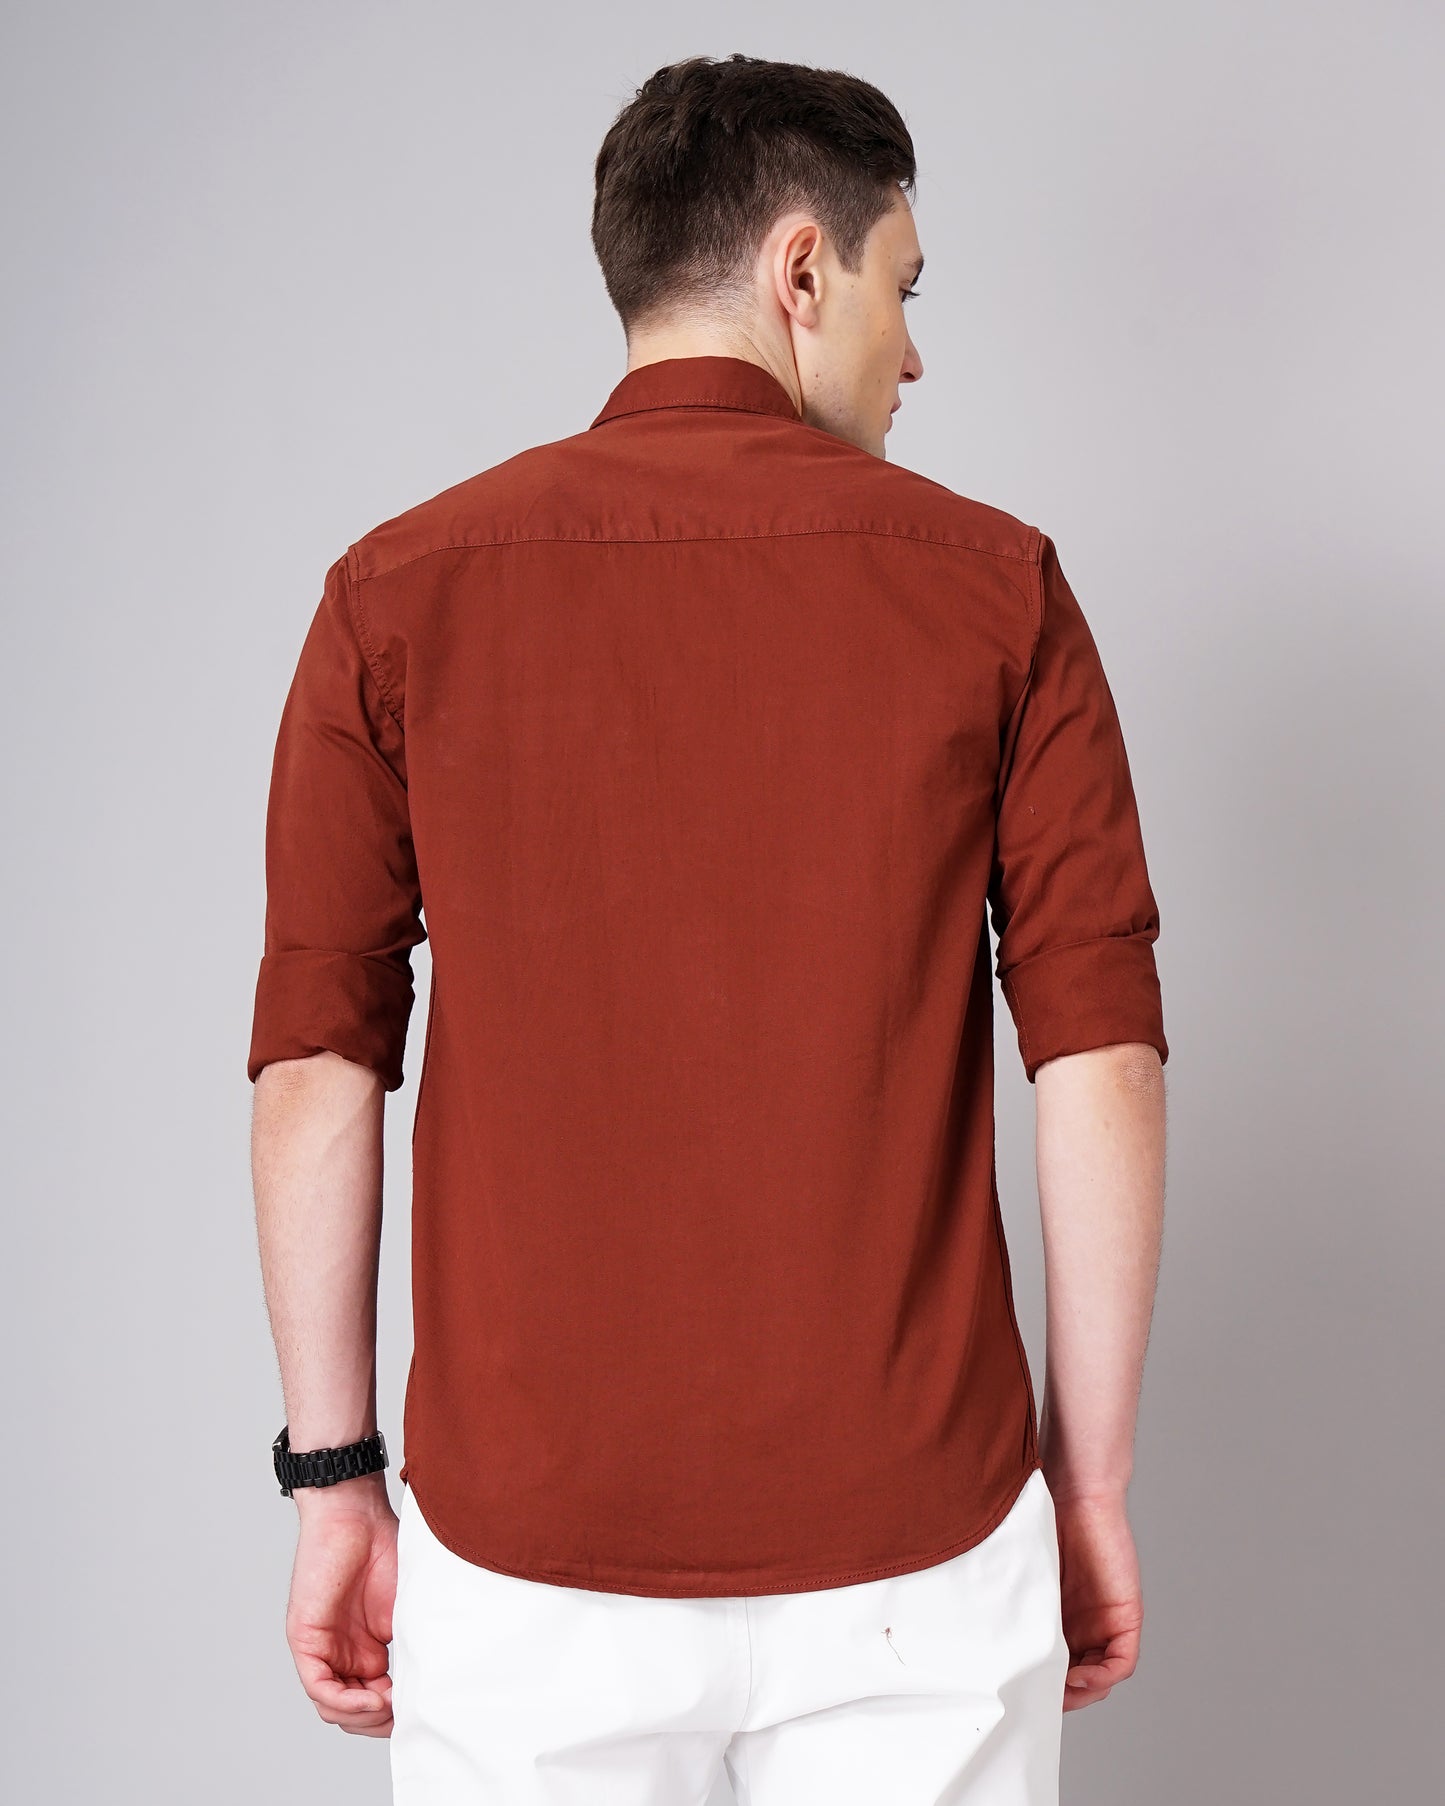 Stark Brown Solid Shirt